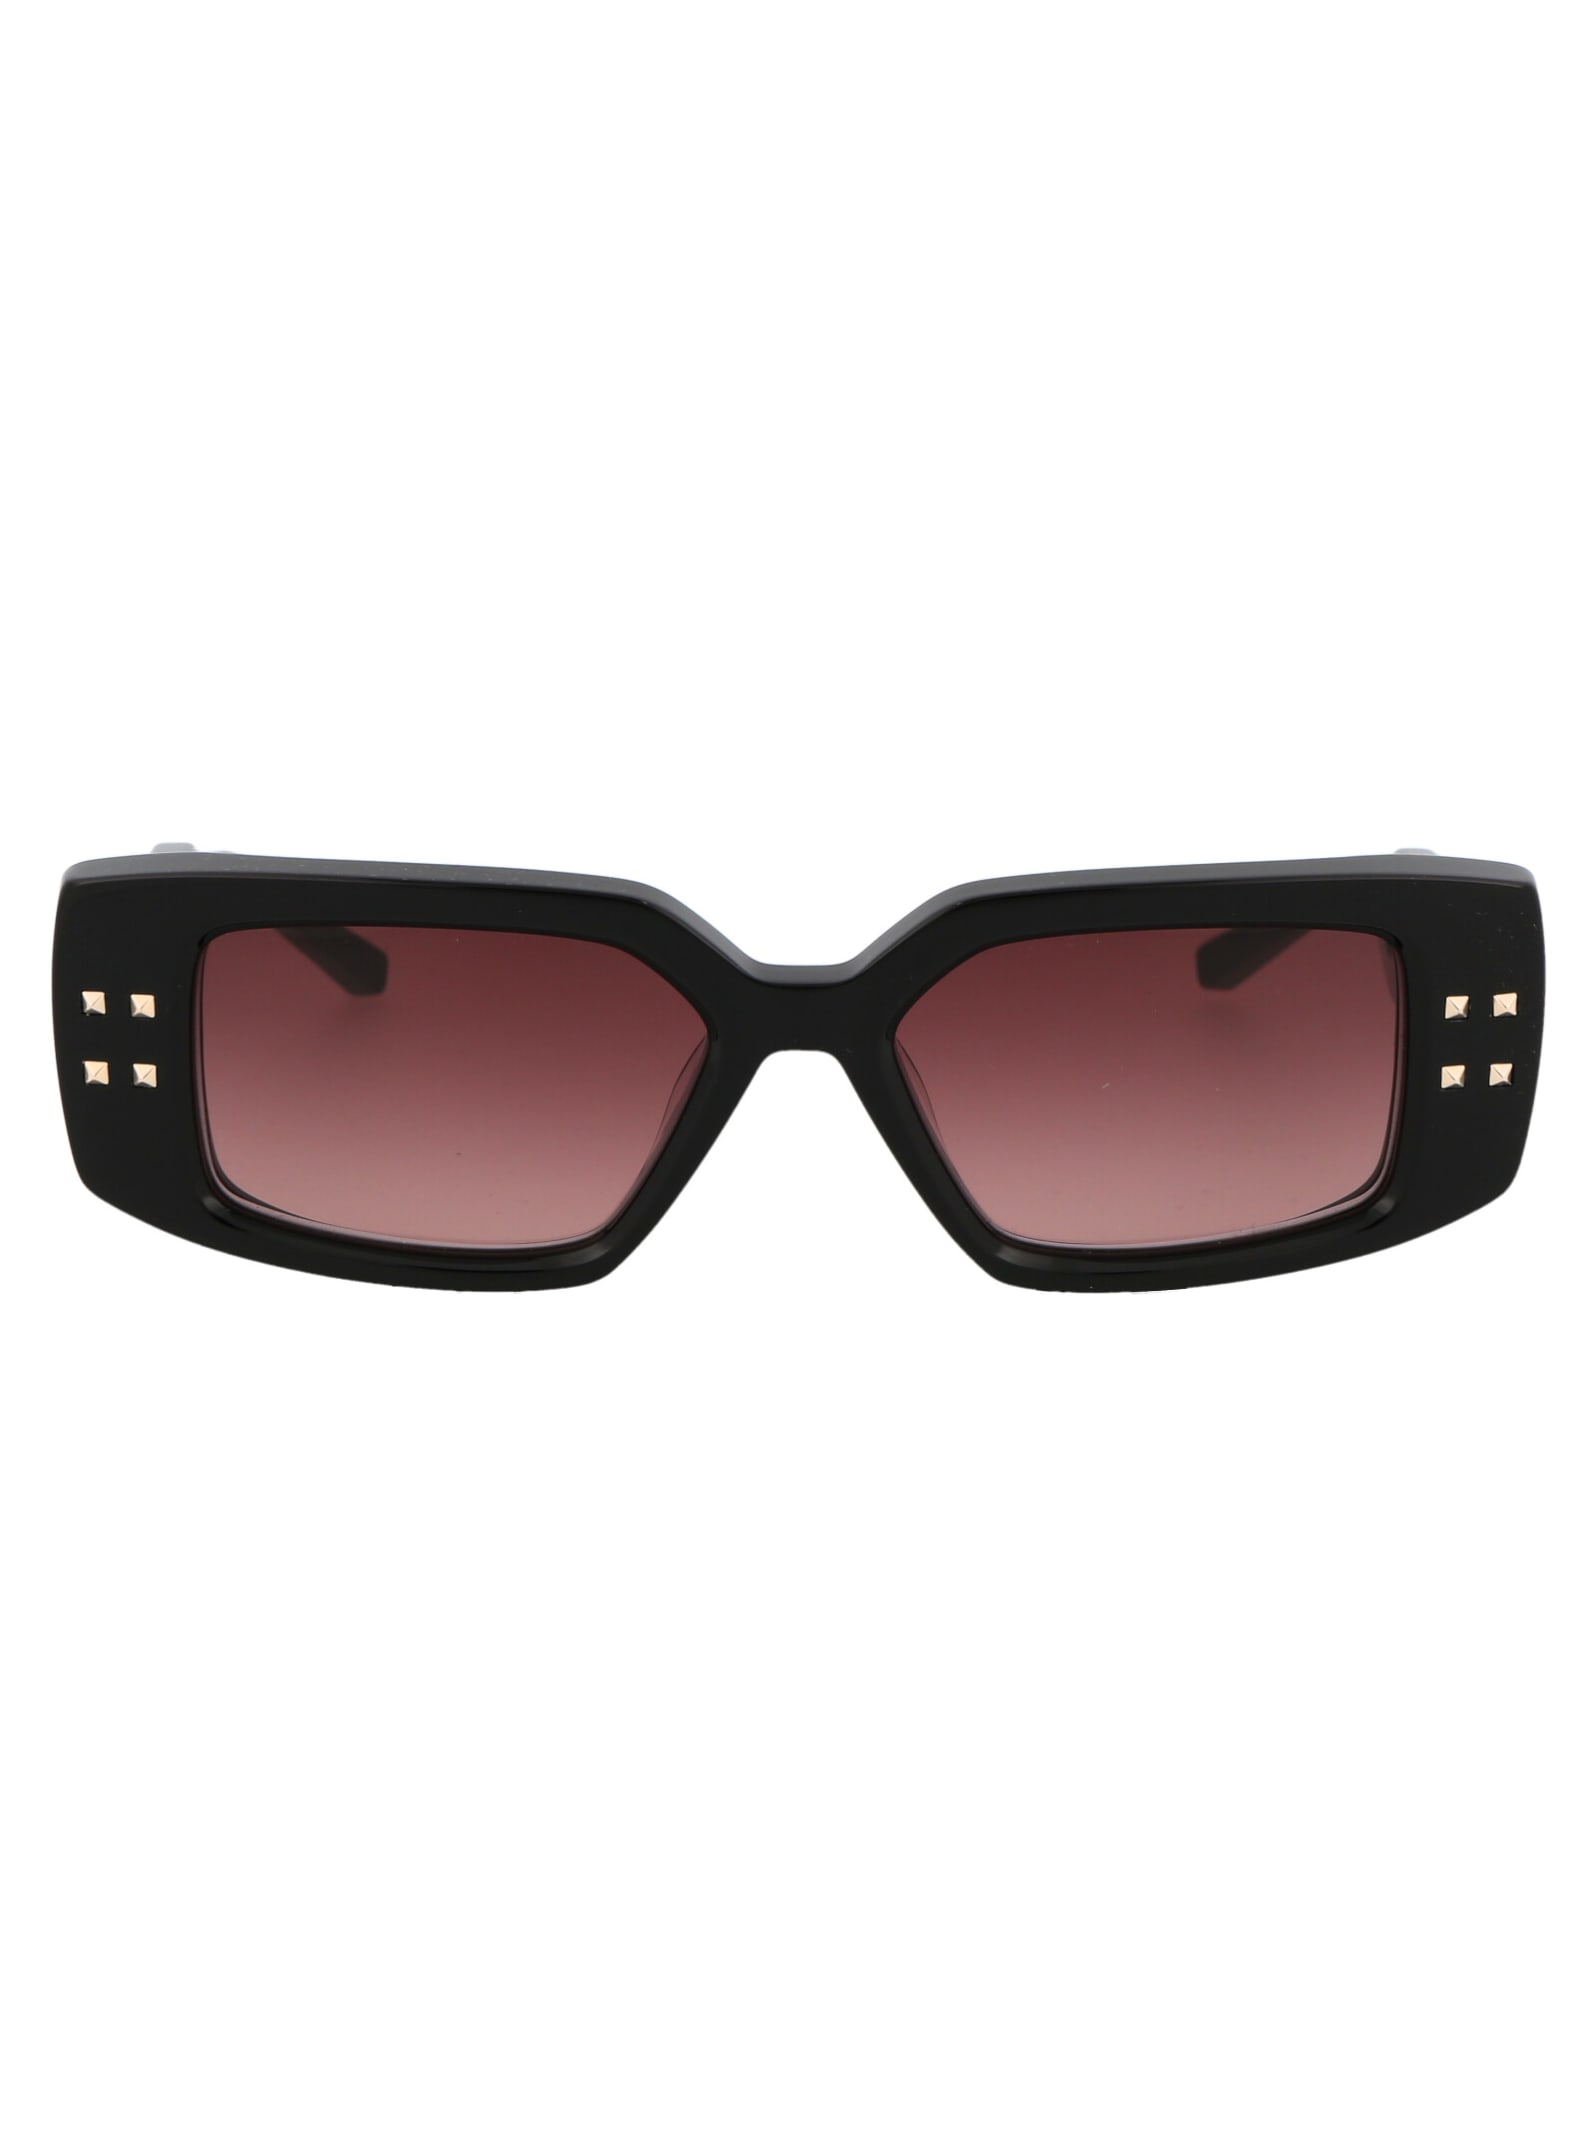 Valentino Eyewear V - Cinque Sunglasses